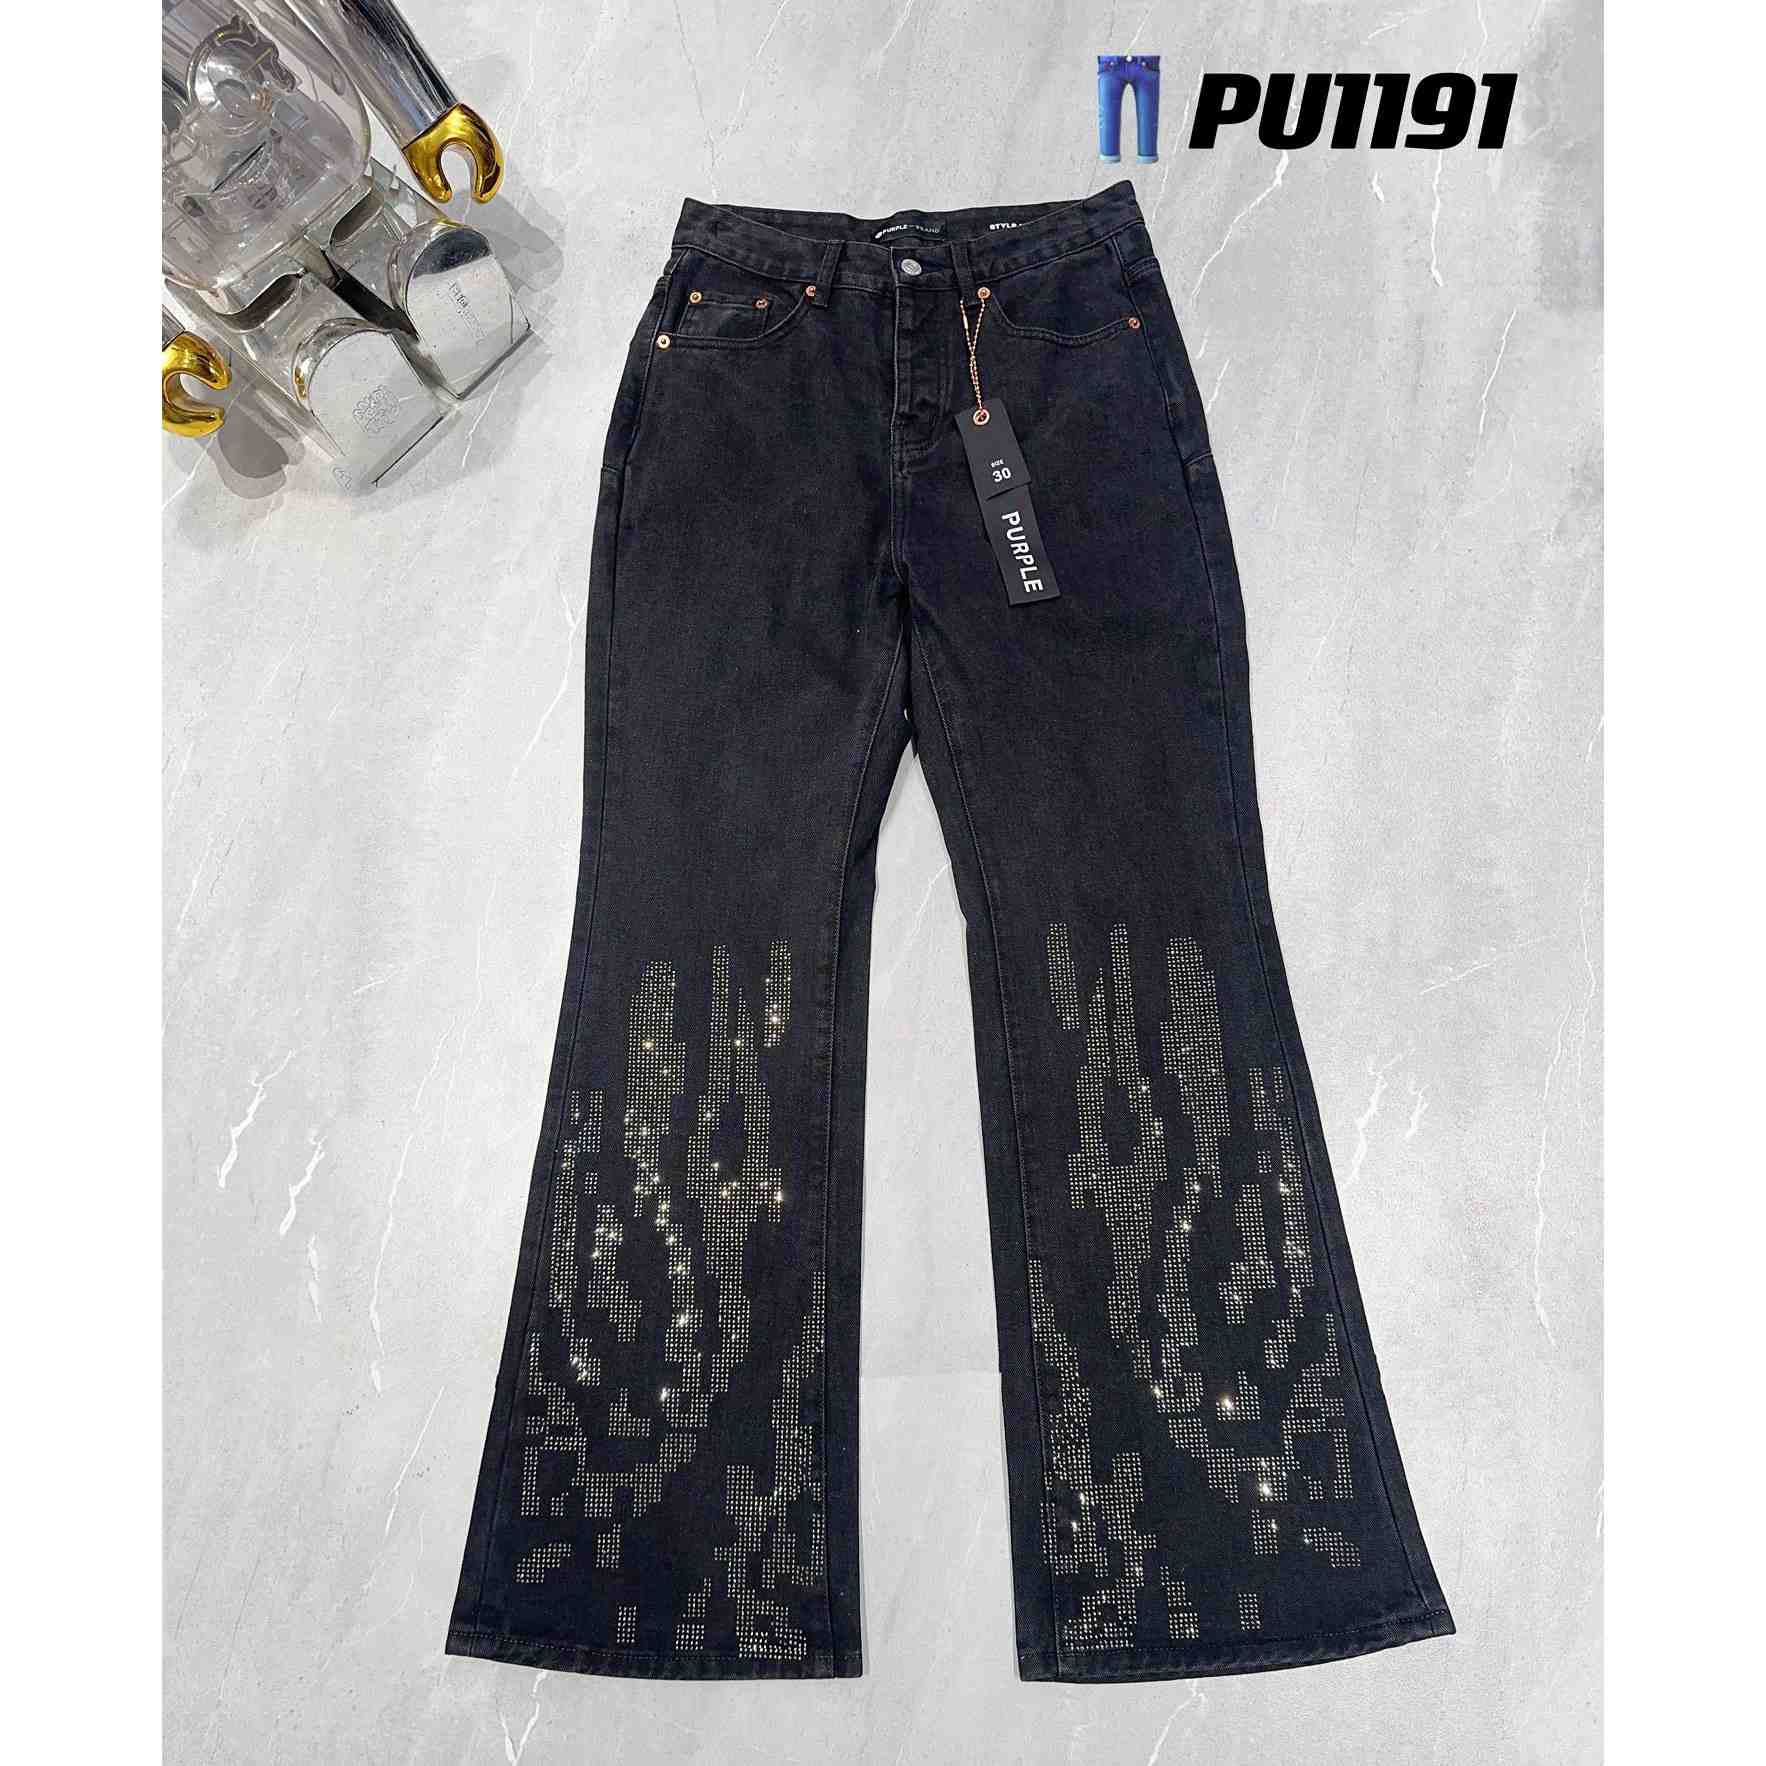 Purple-Brand Jeans   PU1191 - everydesigner